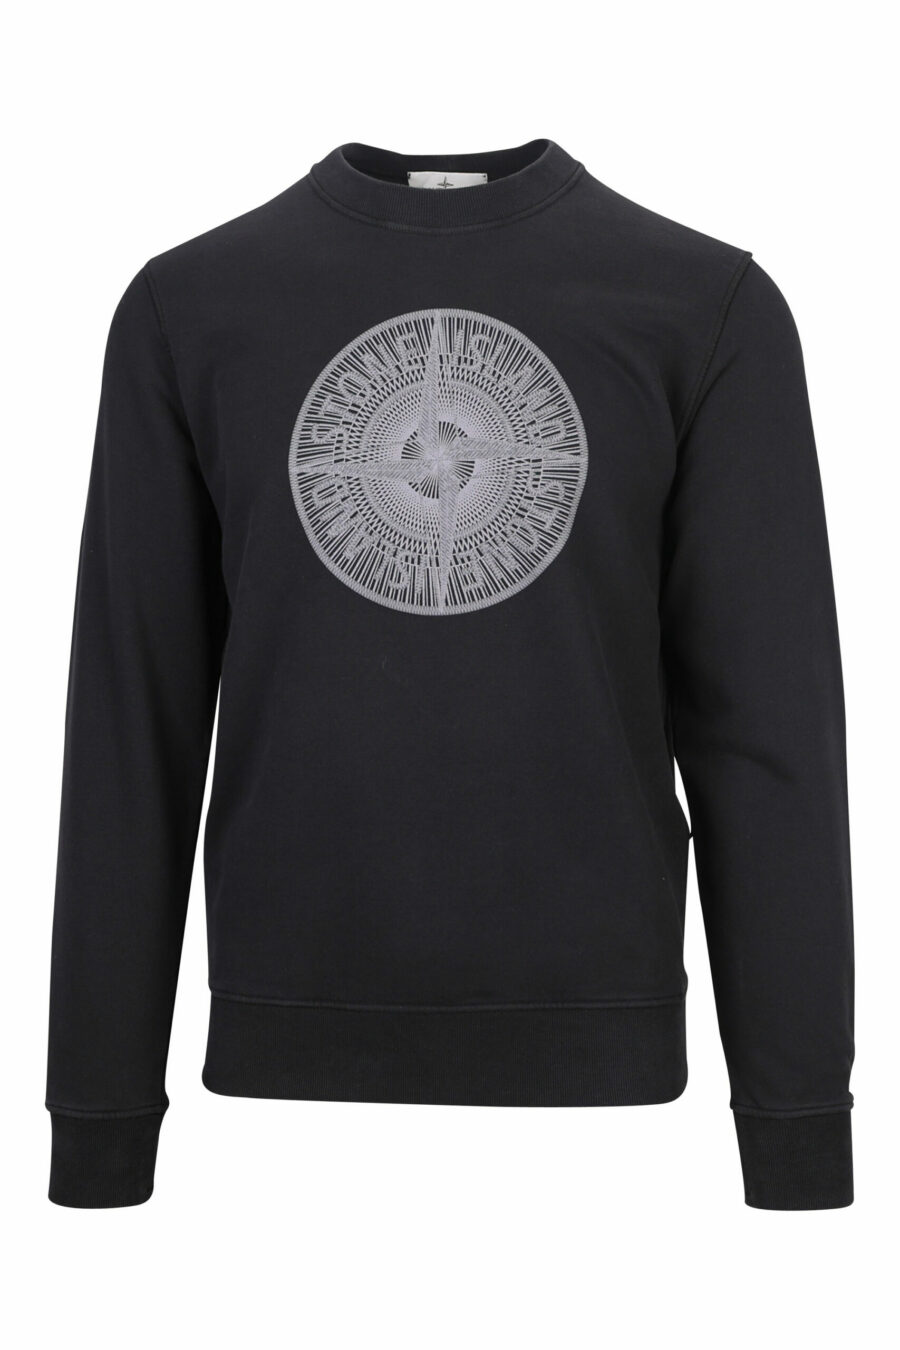 Sweatshirt noir avec maxilogo circulaire - 8052572740039 scaled